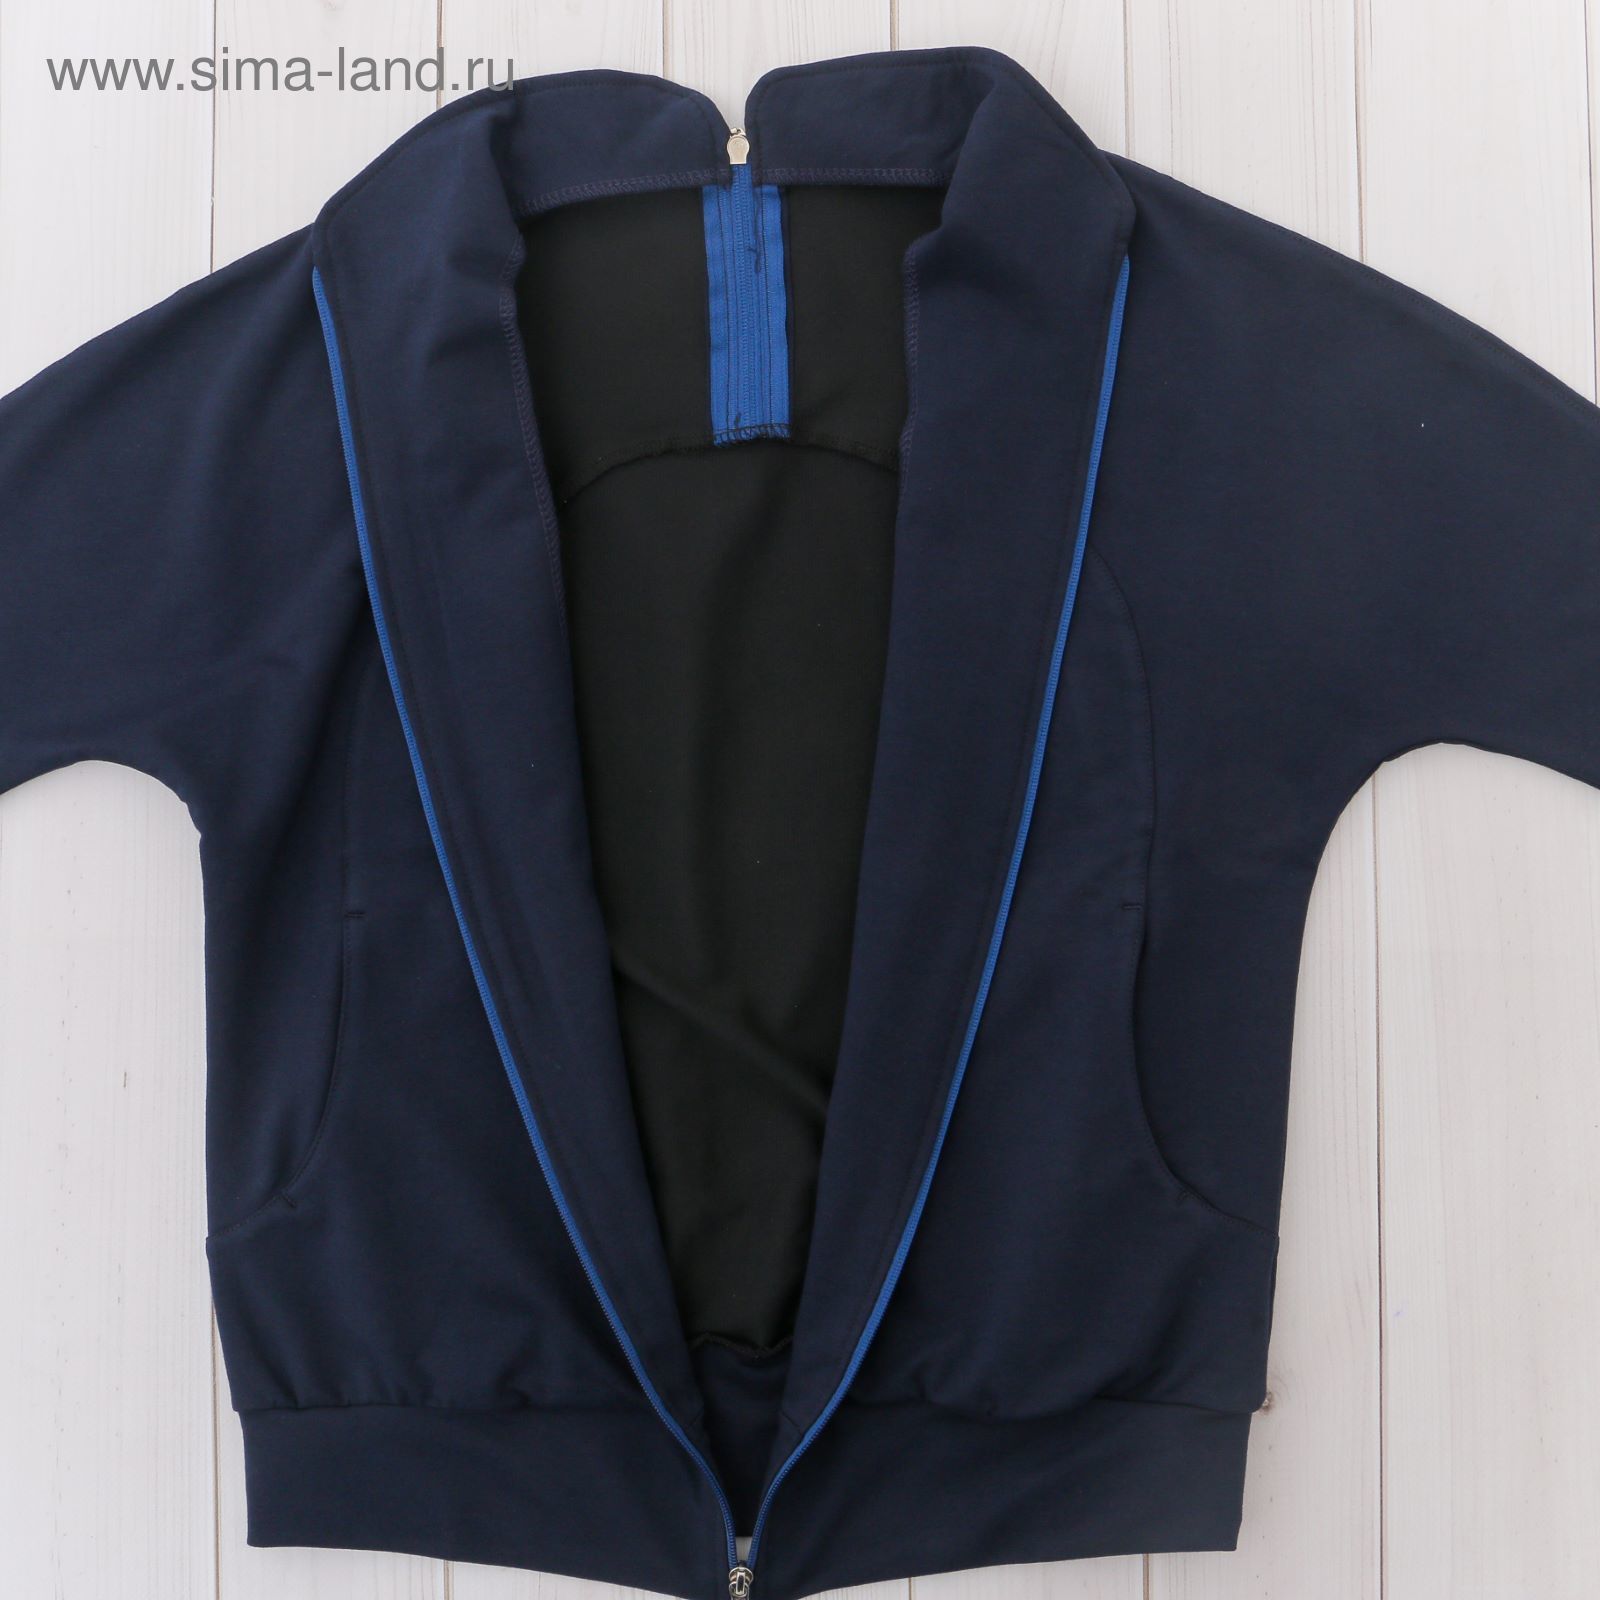 Костюм женский (куртка, брюки) М-529-05 синий, р-р 44